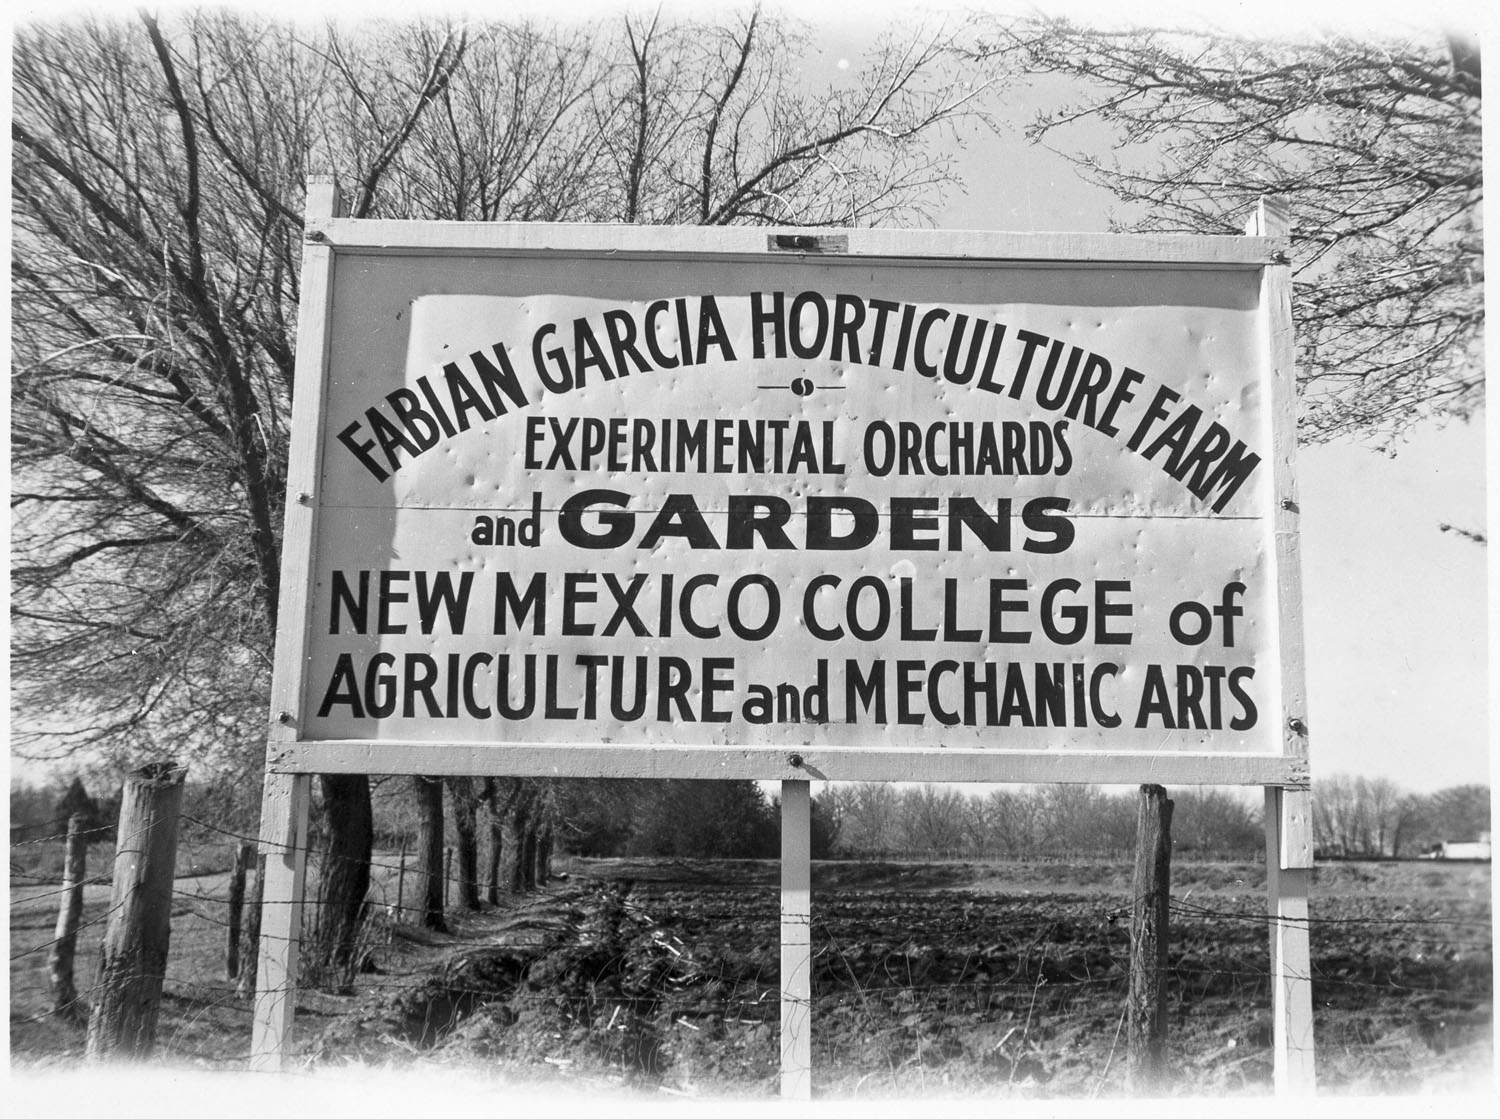 Fabian Garcia Horticulture Farm sign